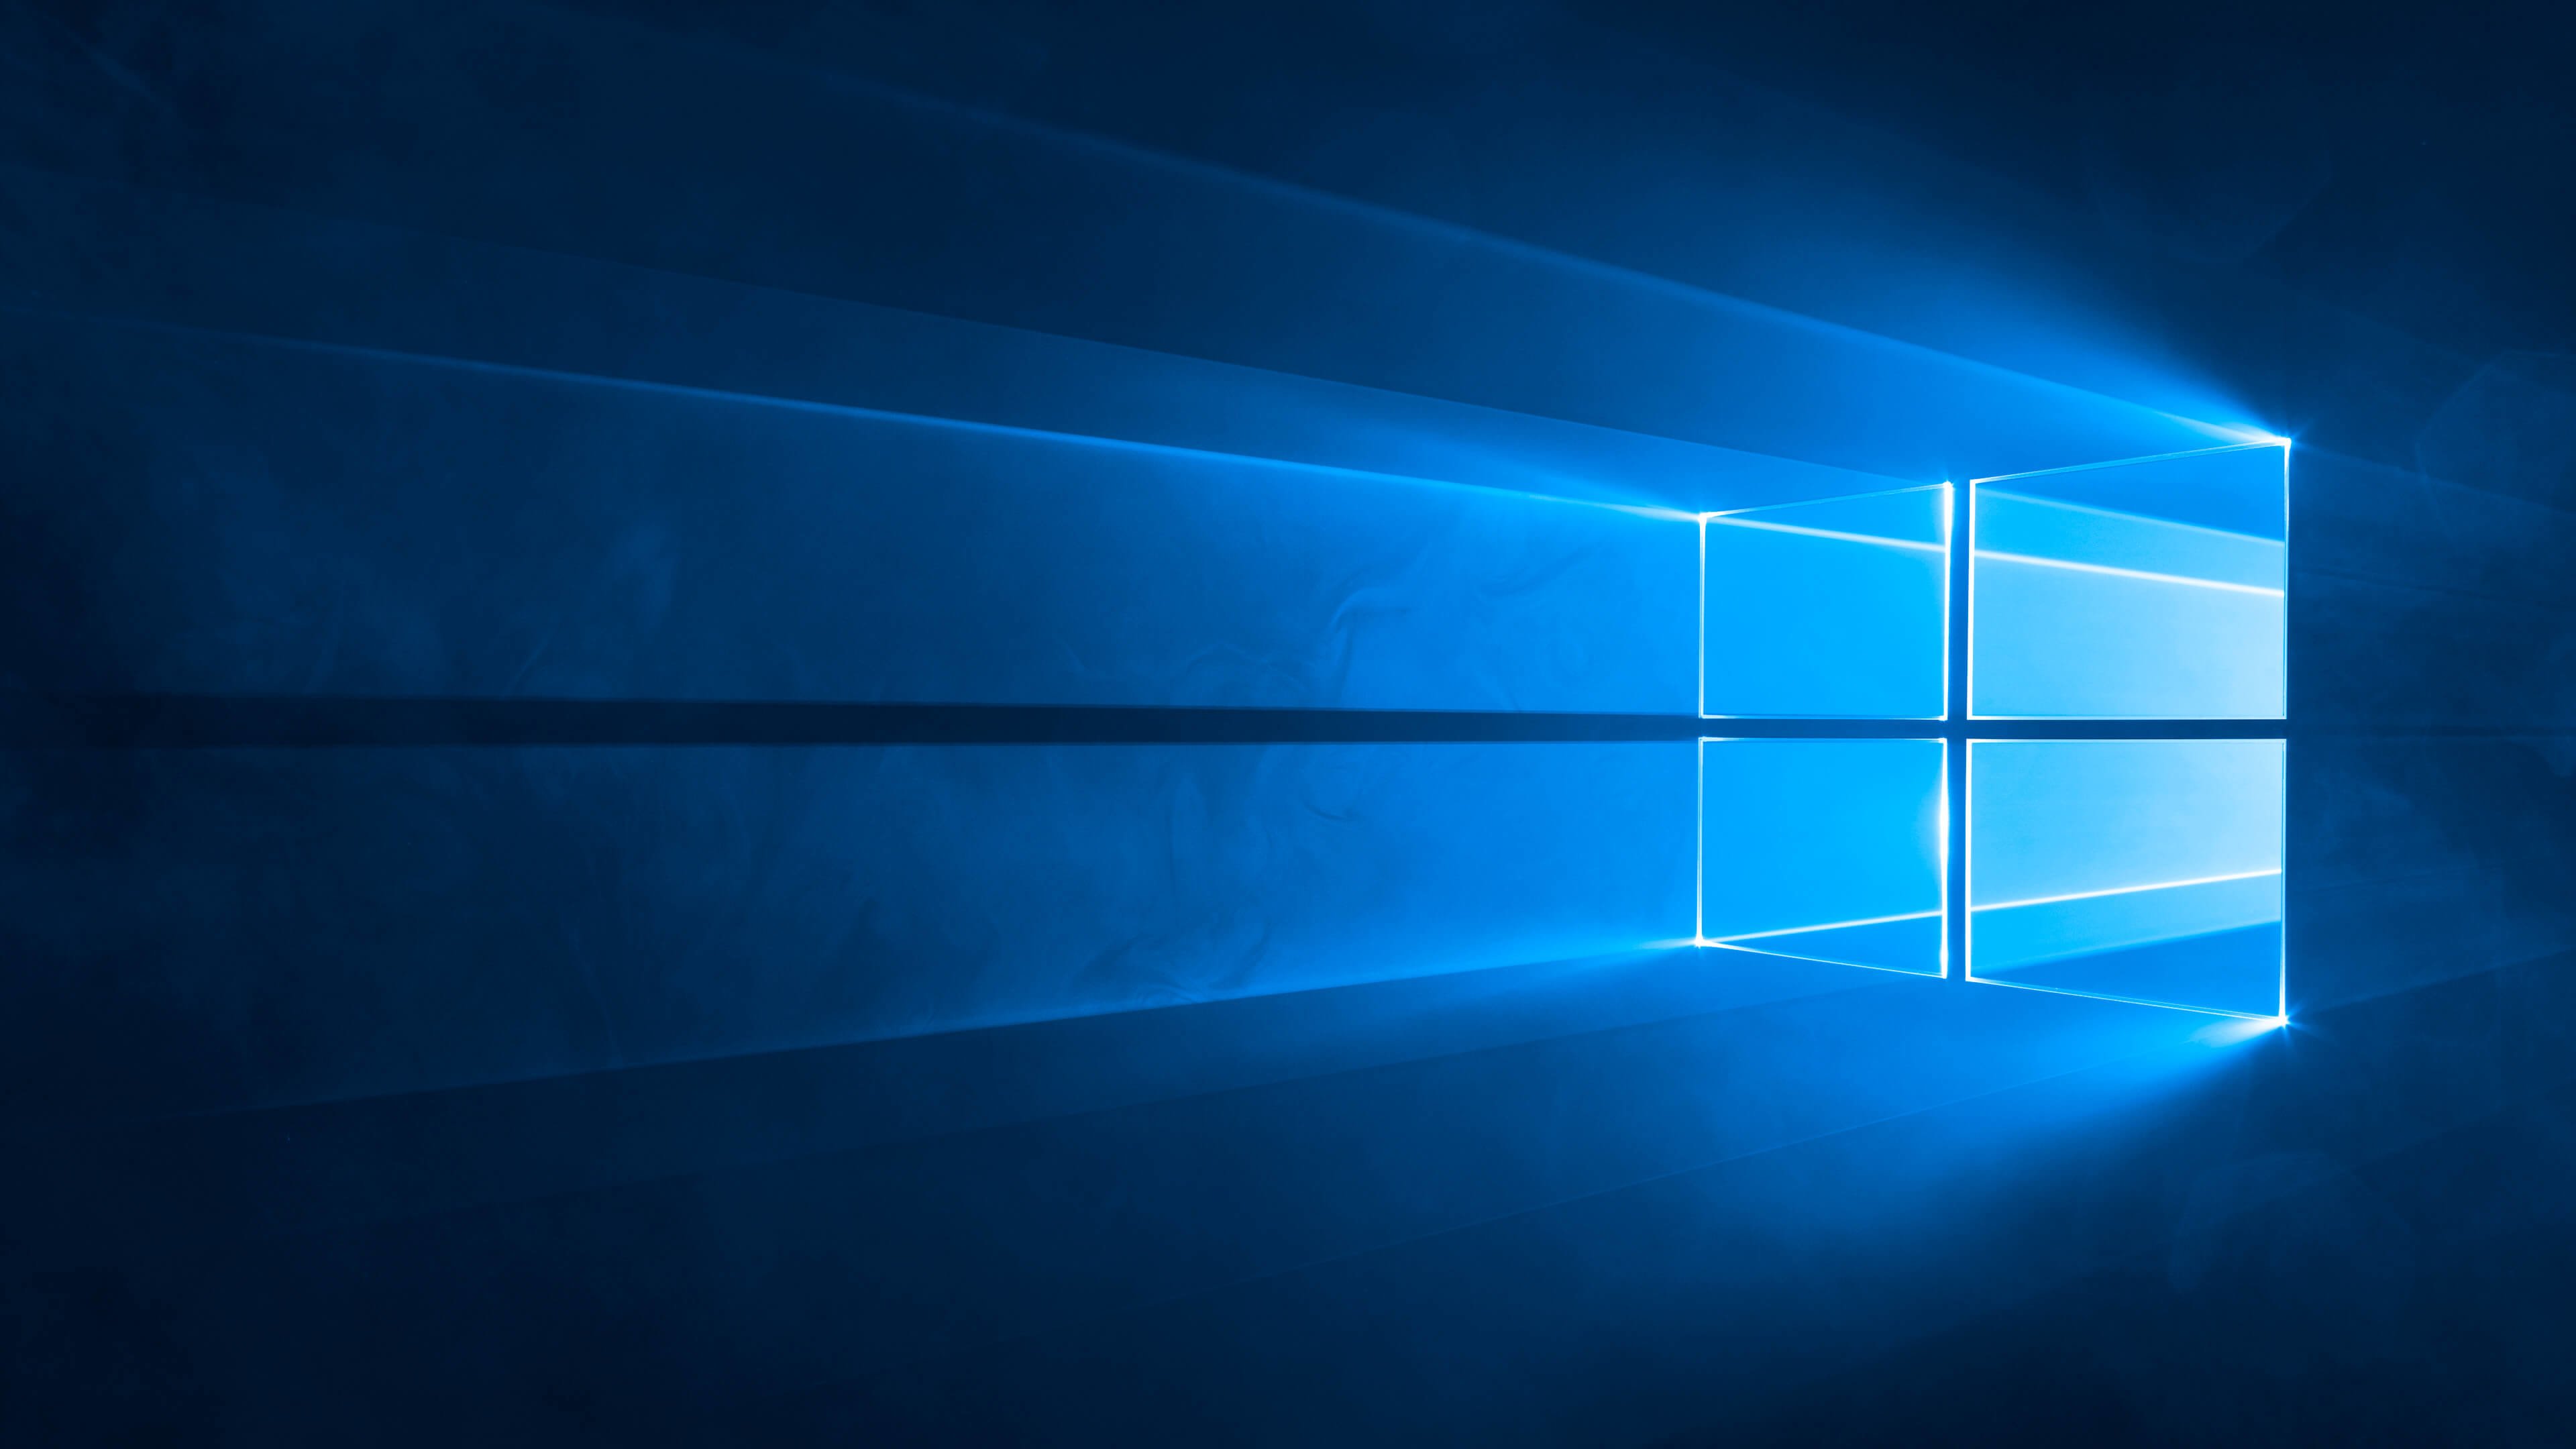 Windows 10 Official Wallpaper for Desktop 4K 3840x2160